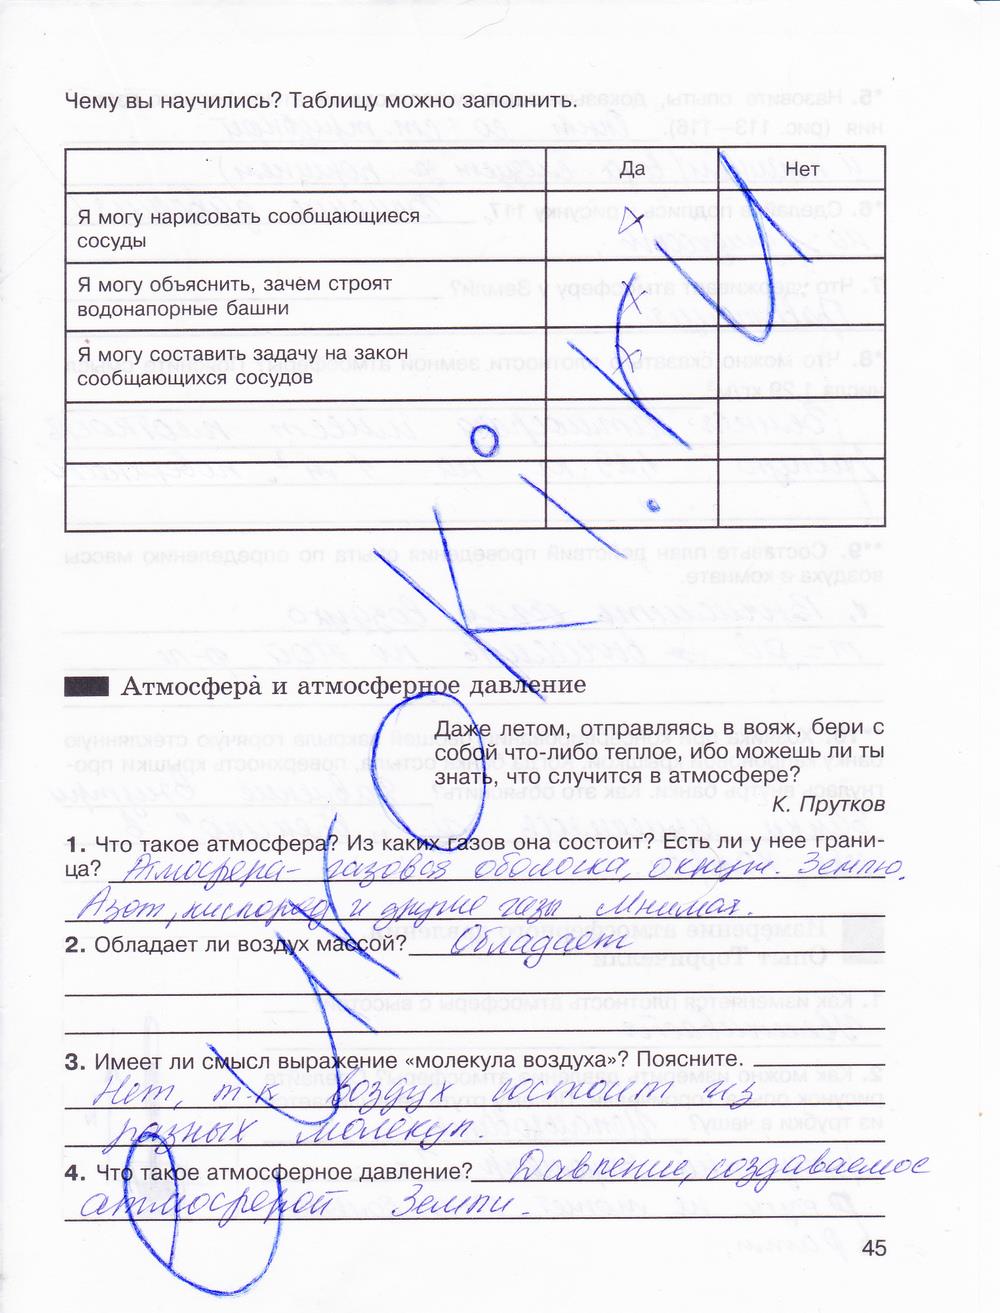 гдз 7 класс рабочая тетрадь страница 45 физика Мартынова, Бовин, Коротаев